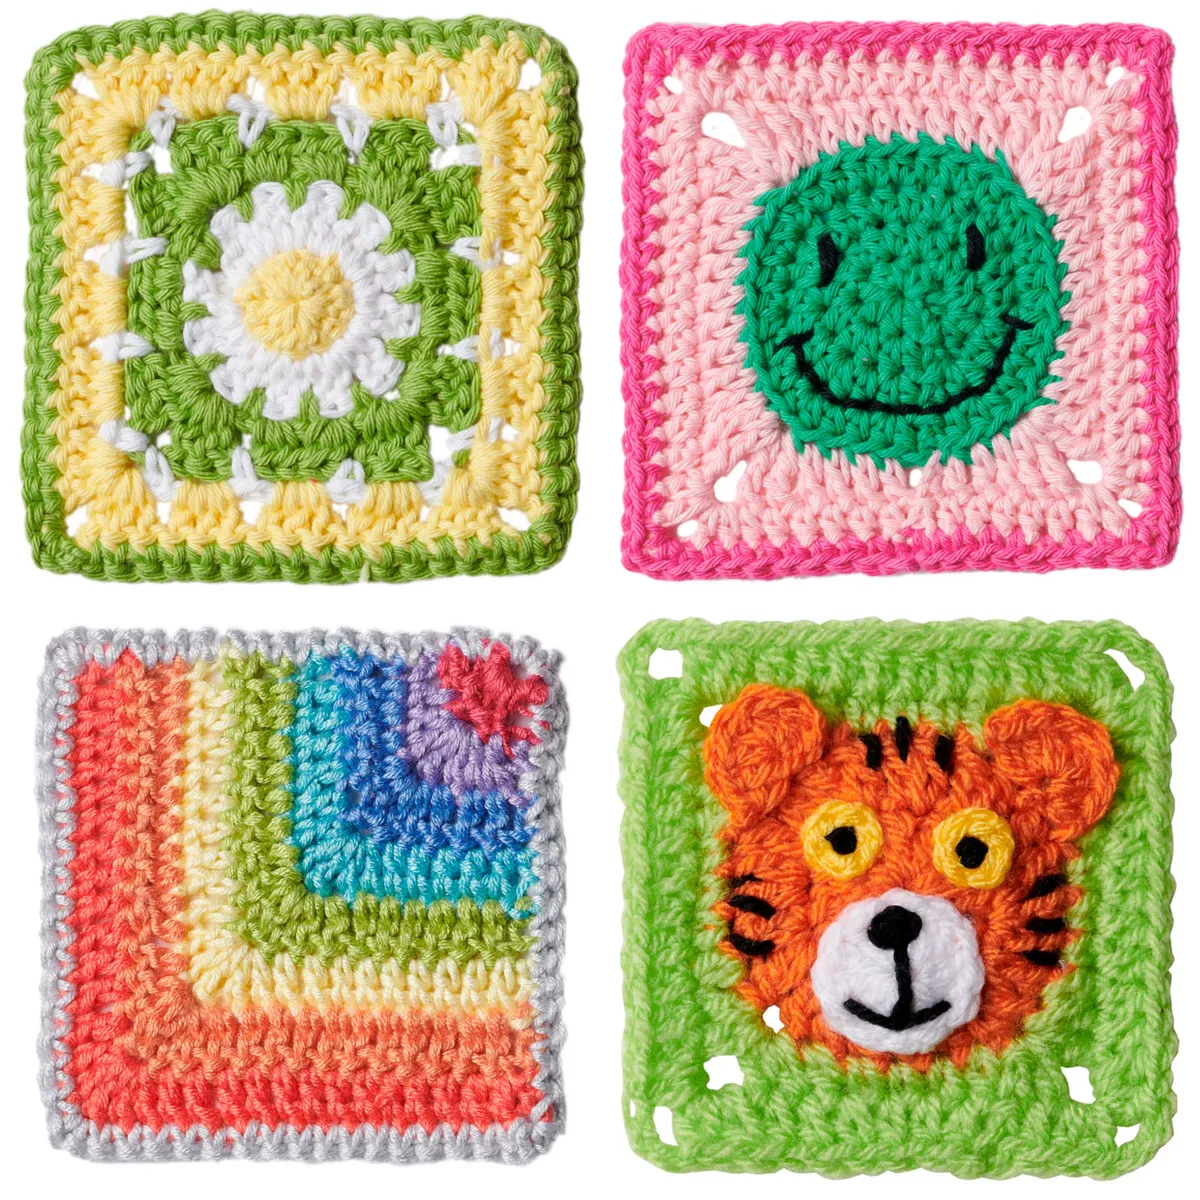 26 Crochet Books -- Granny Squares ideas